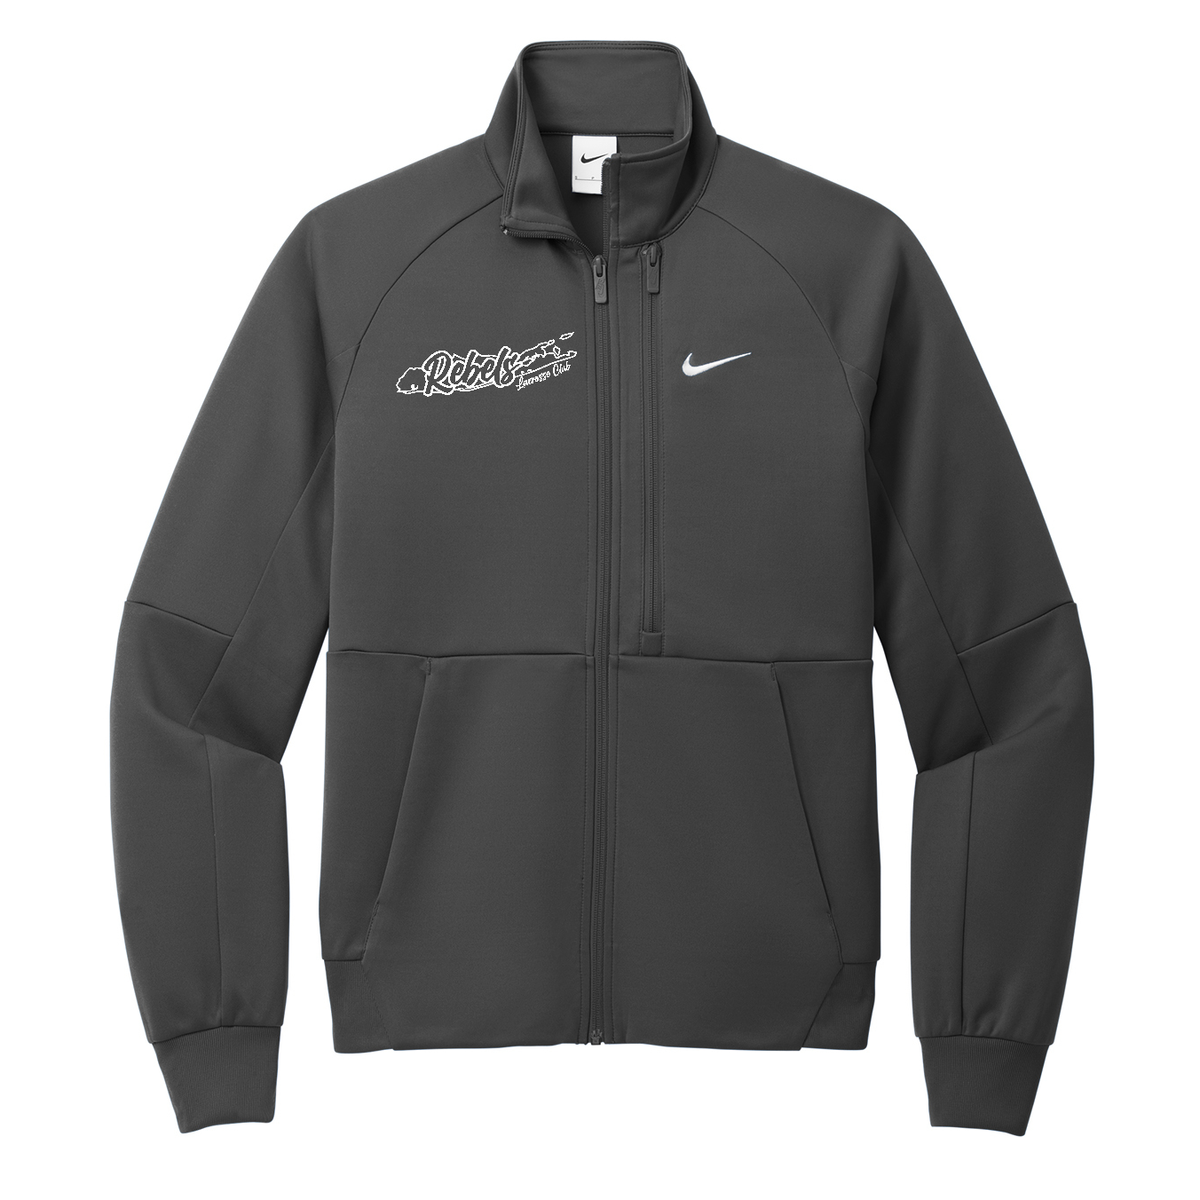 Rebels LC Nike Full-Zip Chest Swoosh Jacket